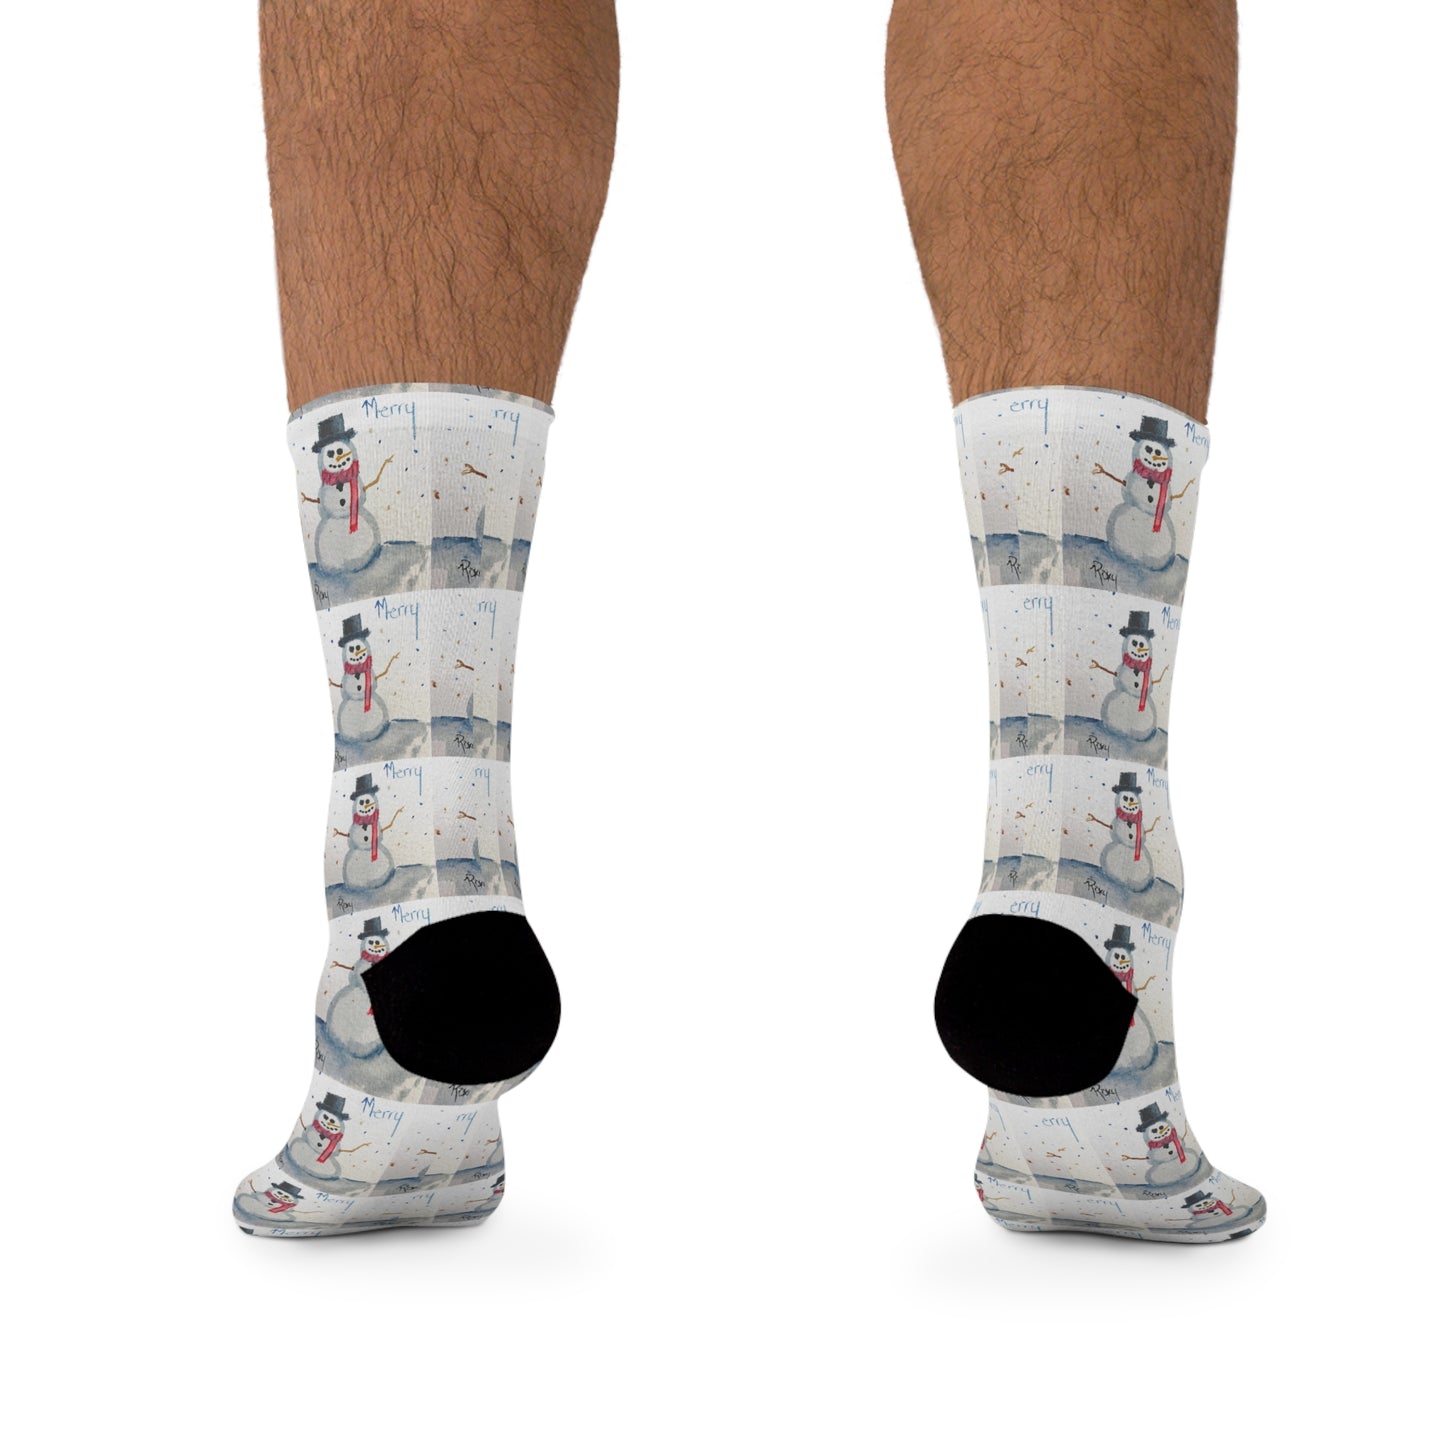 Merry Snowman Socks